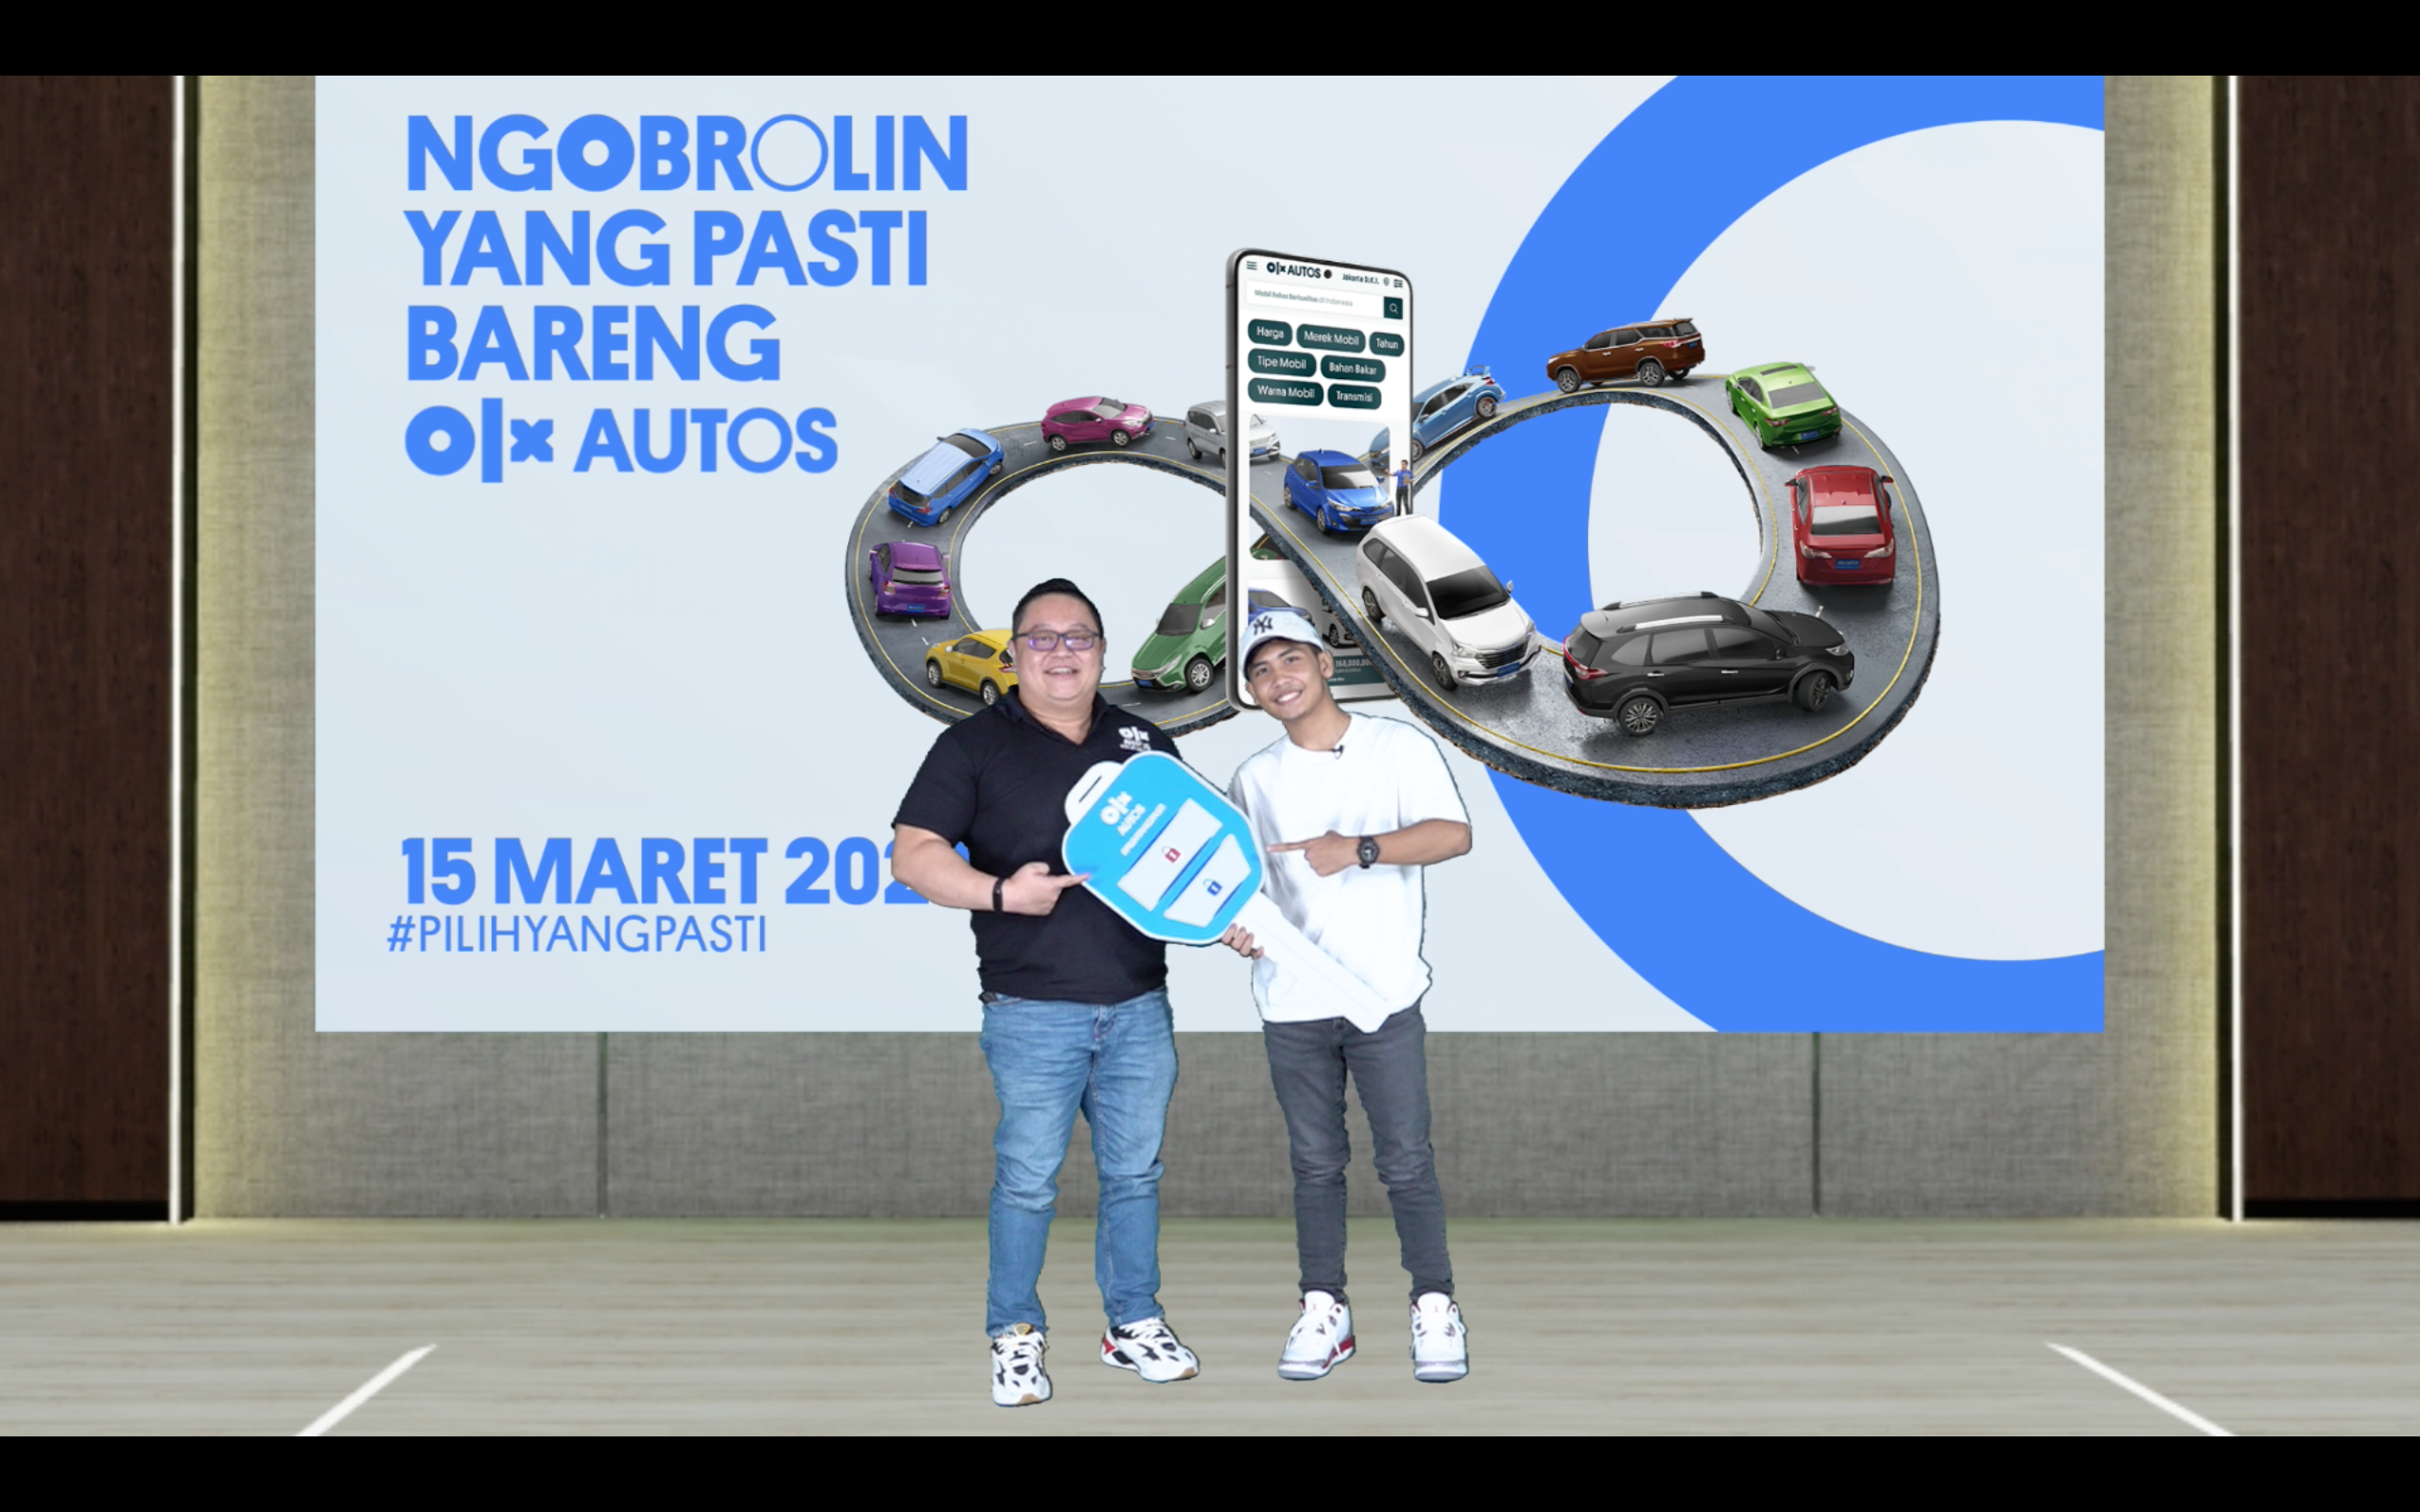 Aftermarket, Kanan-Kiri-Johnny-Widodo-CEO-OLX-Autos-Indonesia-bersama-dengan-Bintang-Emon-Komedian-Influencer-dan-Aktor-dalam-peluncuran-campaign-PilihYangPasti: #PilihYangPasti : Semangat & Komitmen Baru OLX Autos Untuk Publik Indonesia